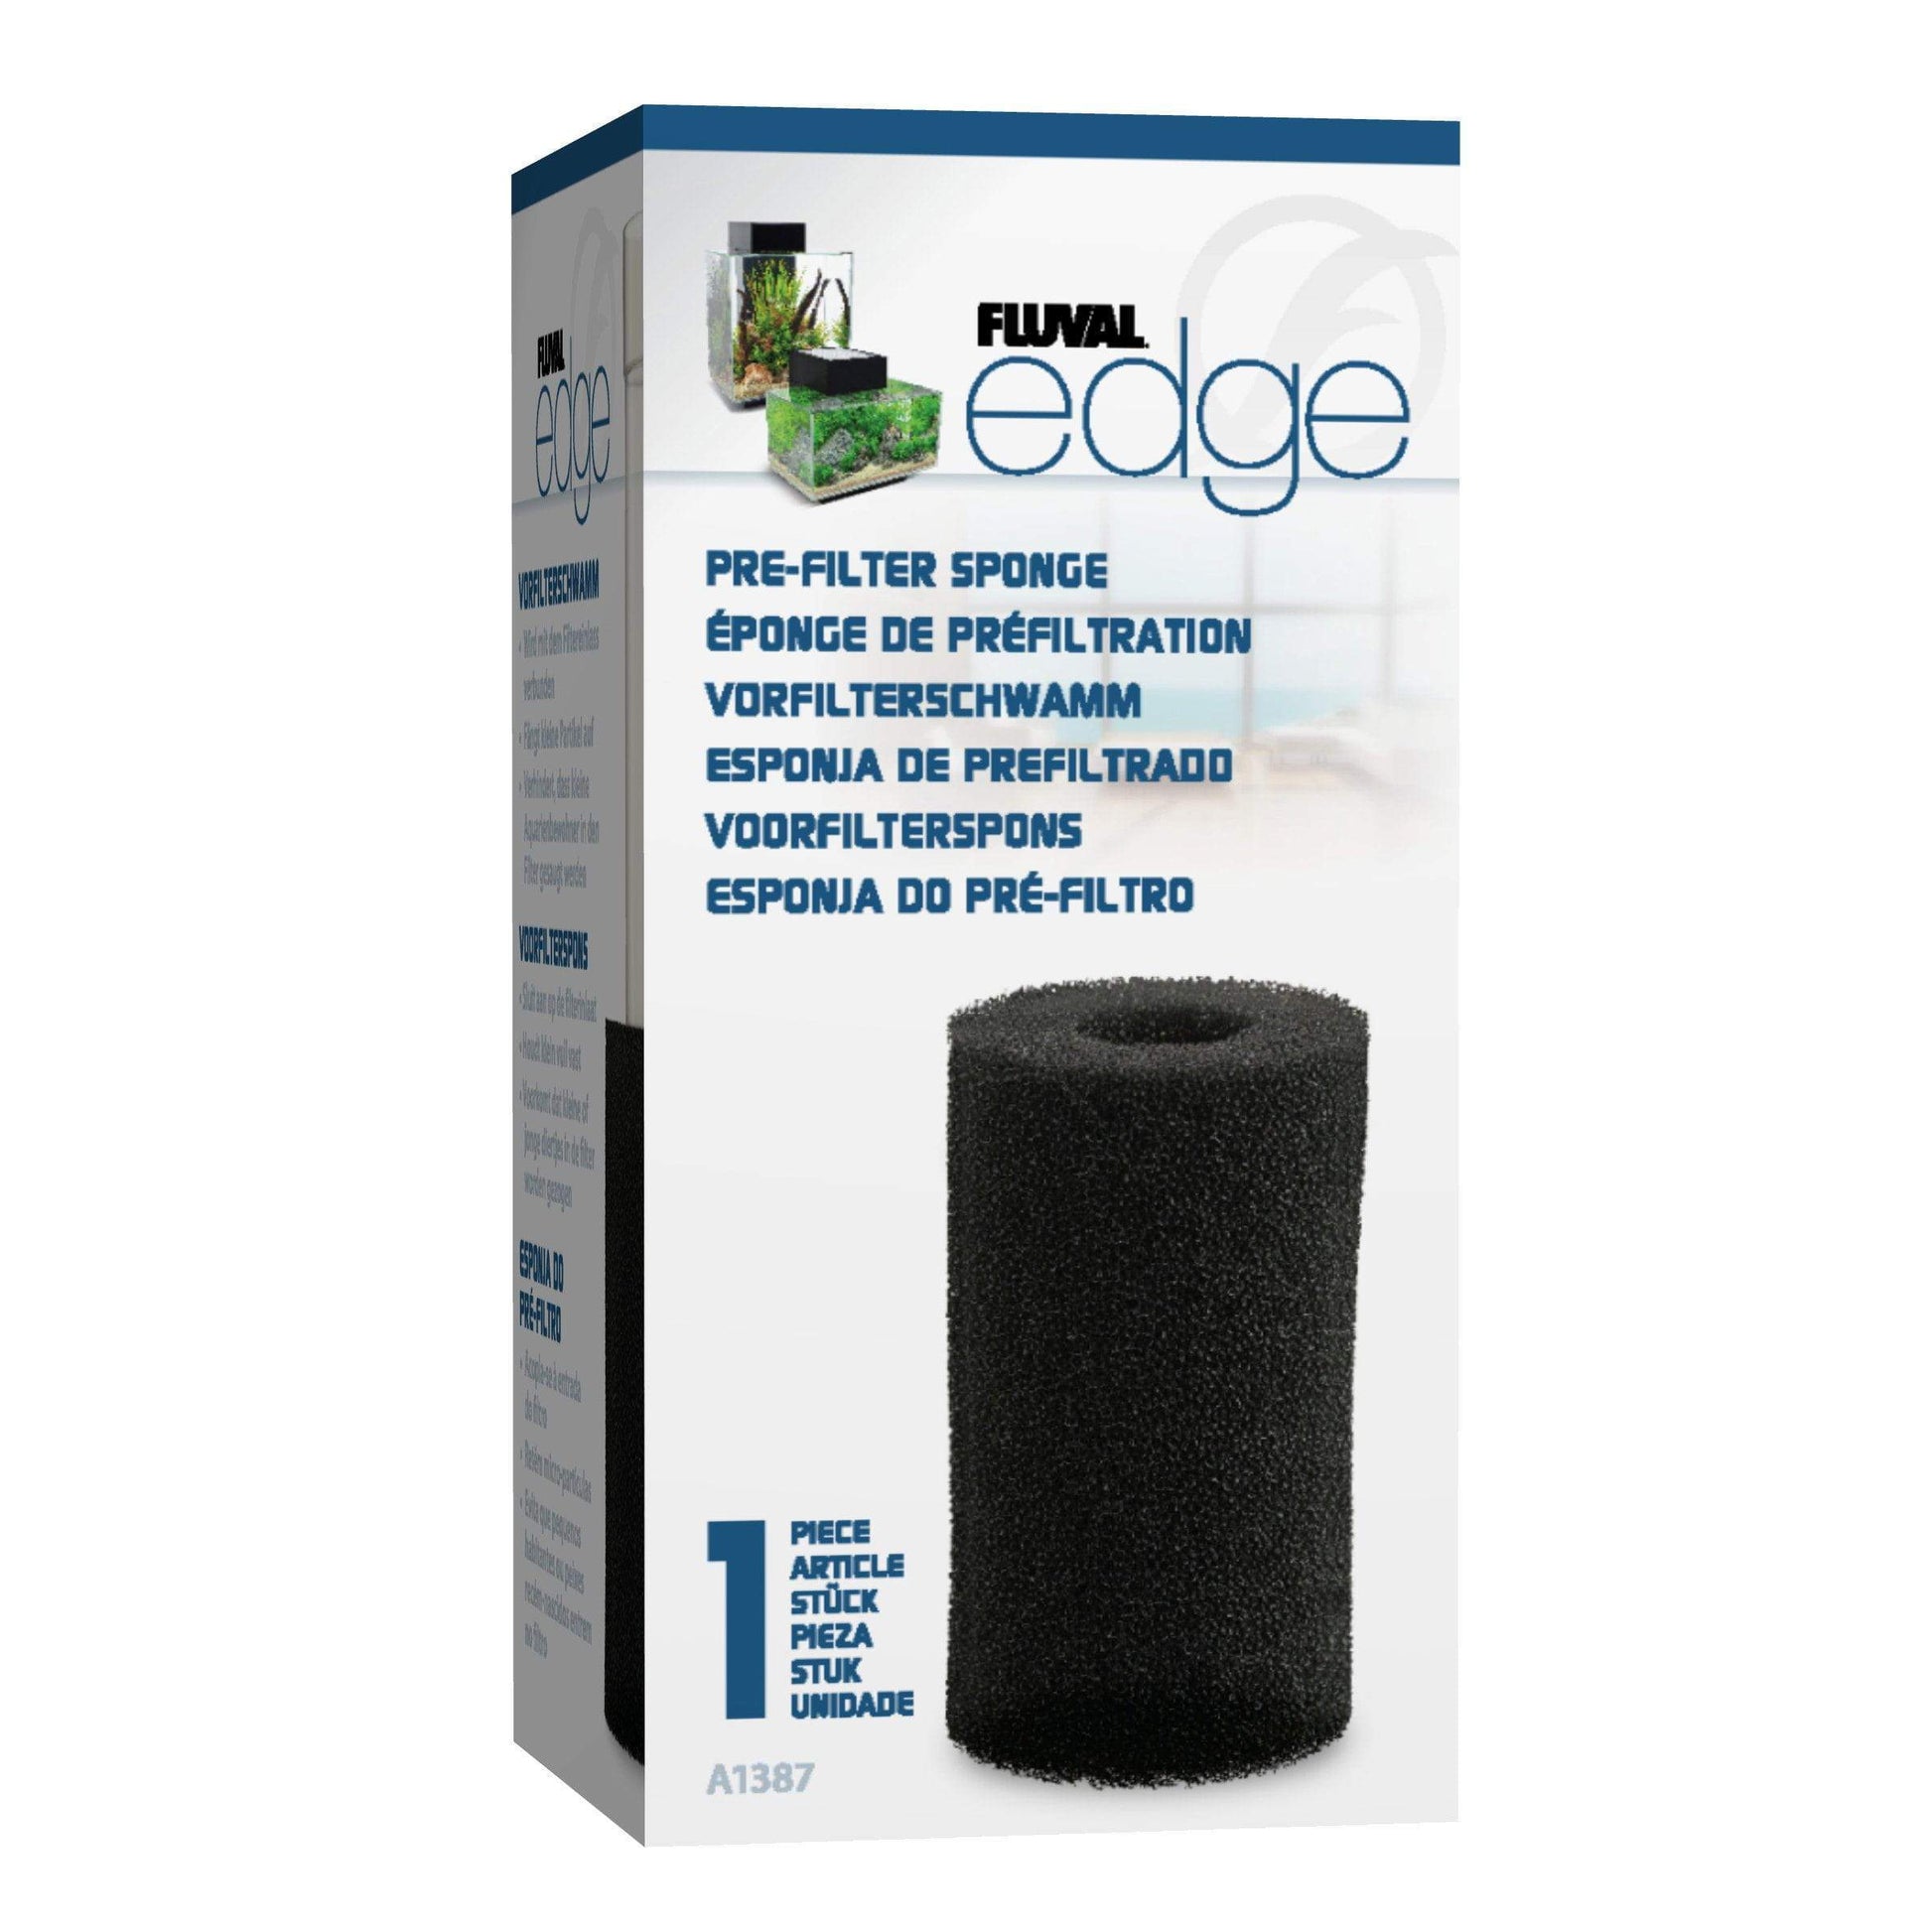 Fluval | EDGE Pre-filter Sponge 015561113878 Super Cichlids